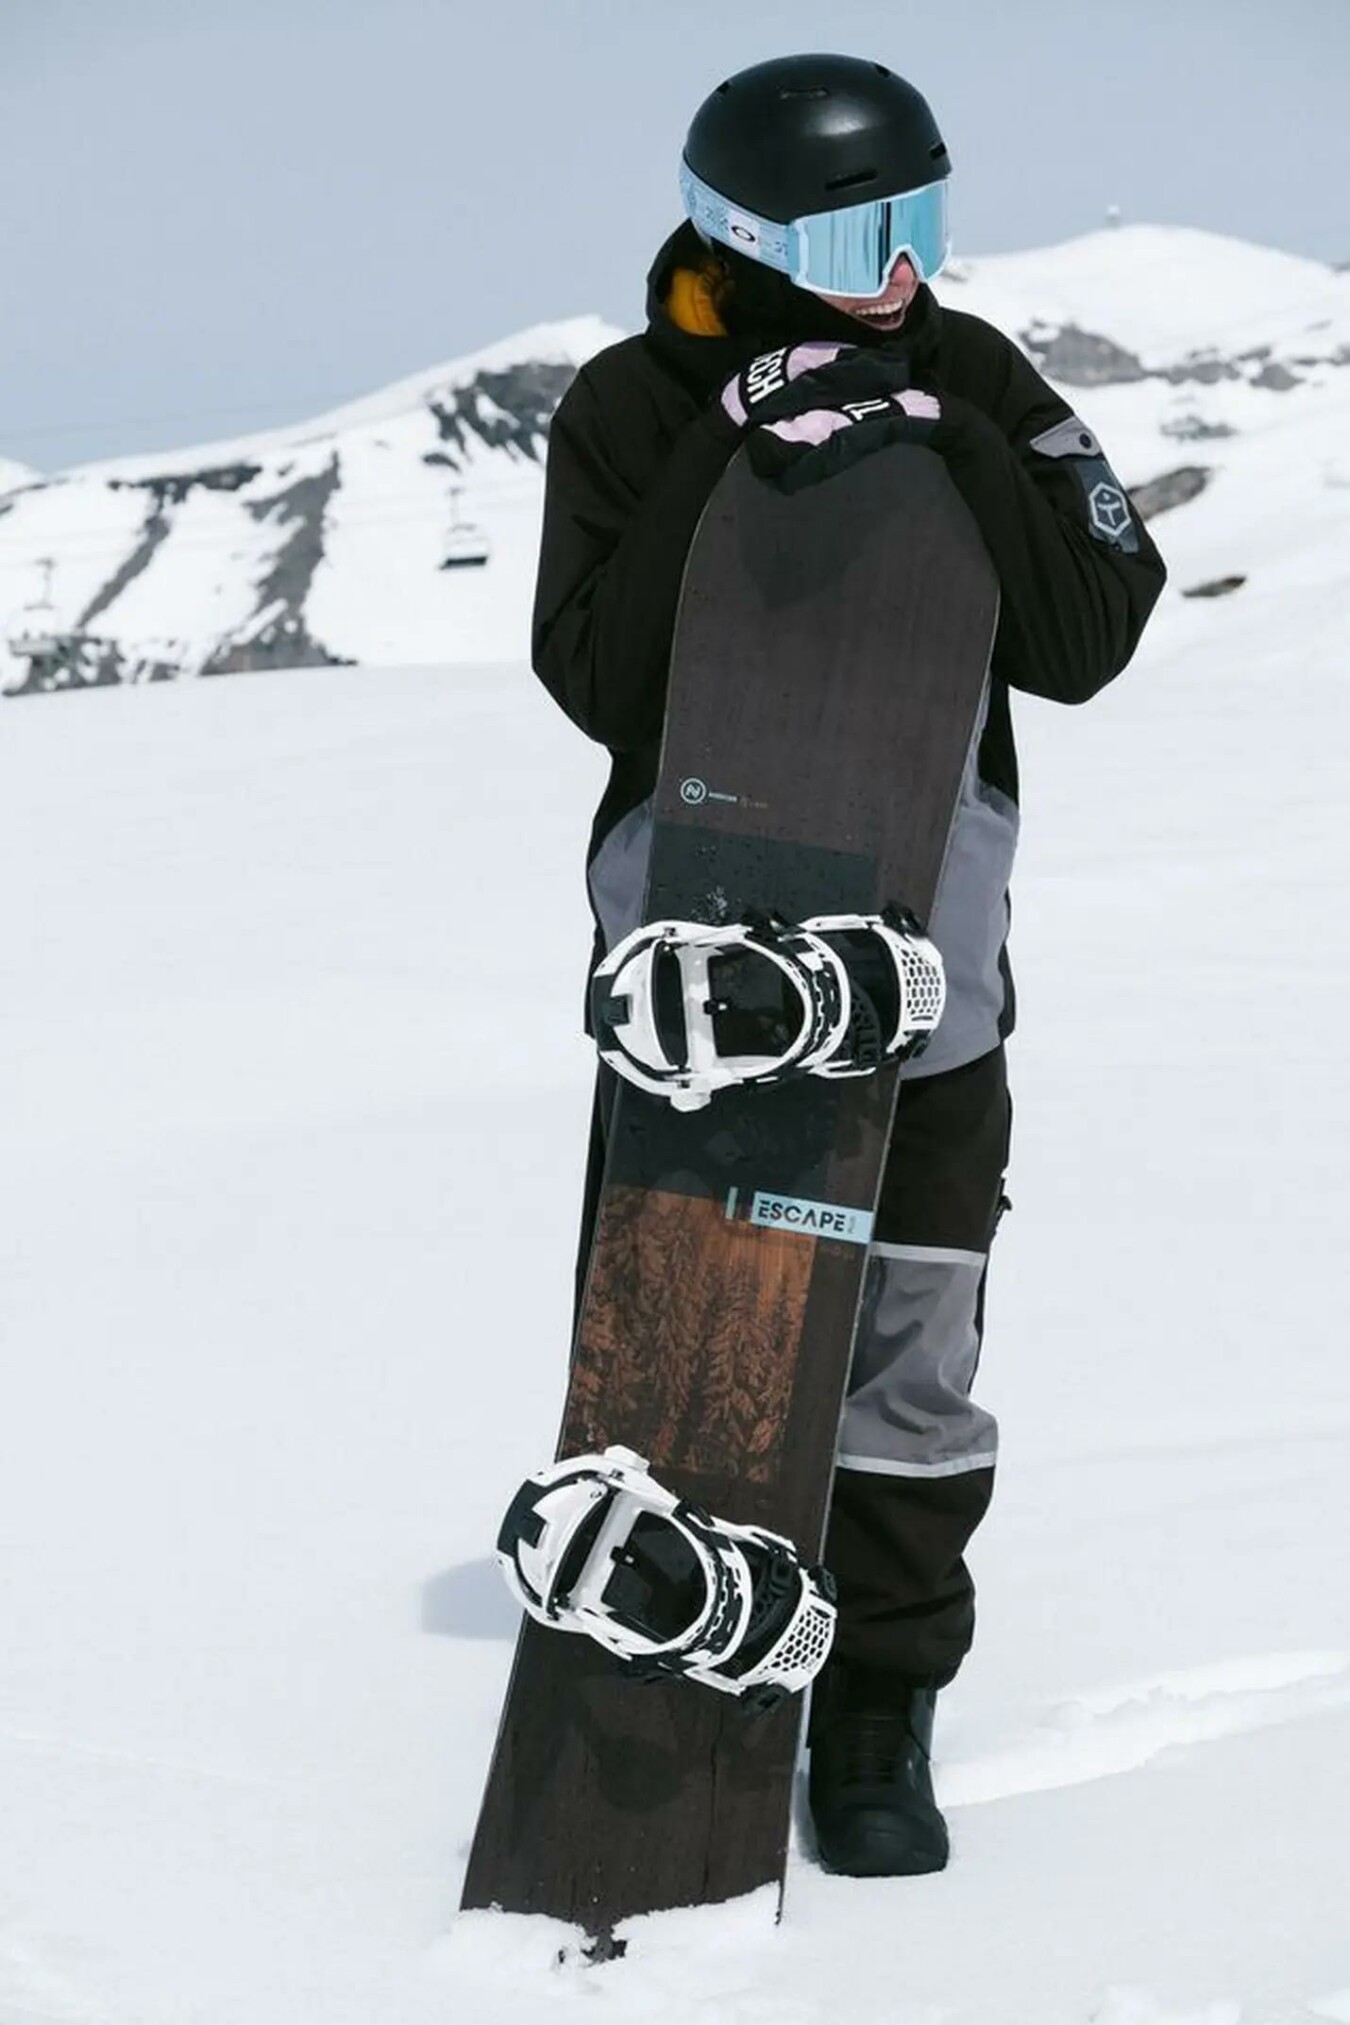 Attacchi Da Snowboard Nidecker Supermatic Bng Bianco